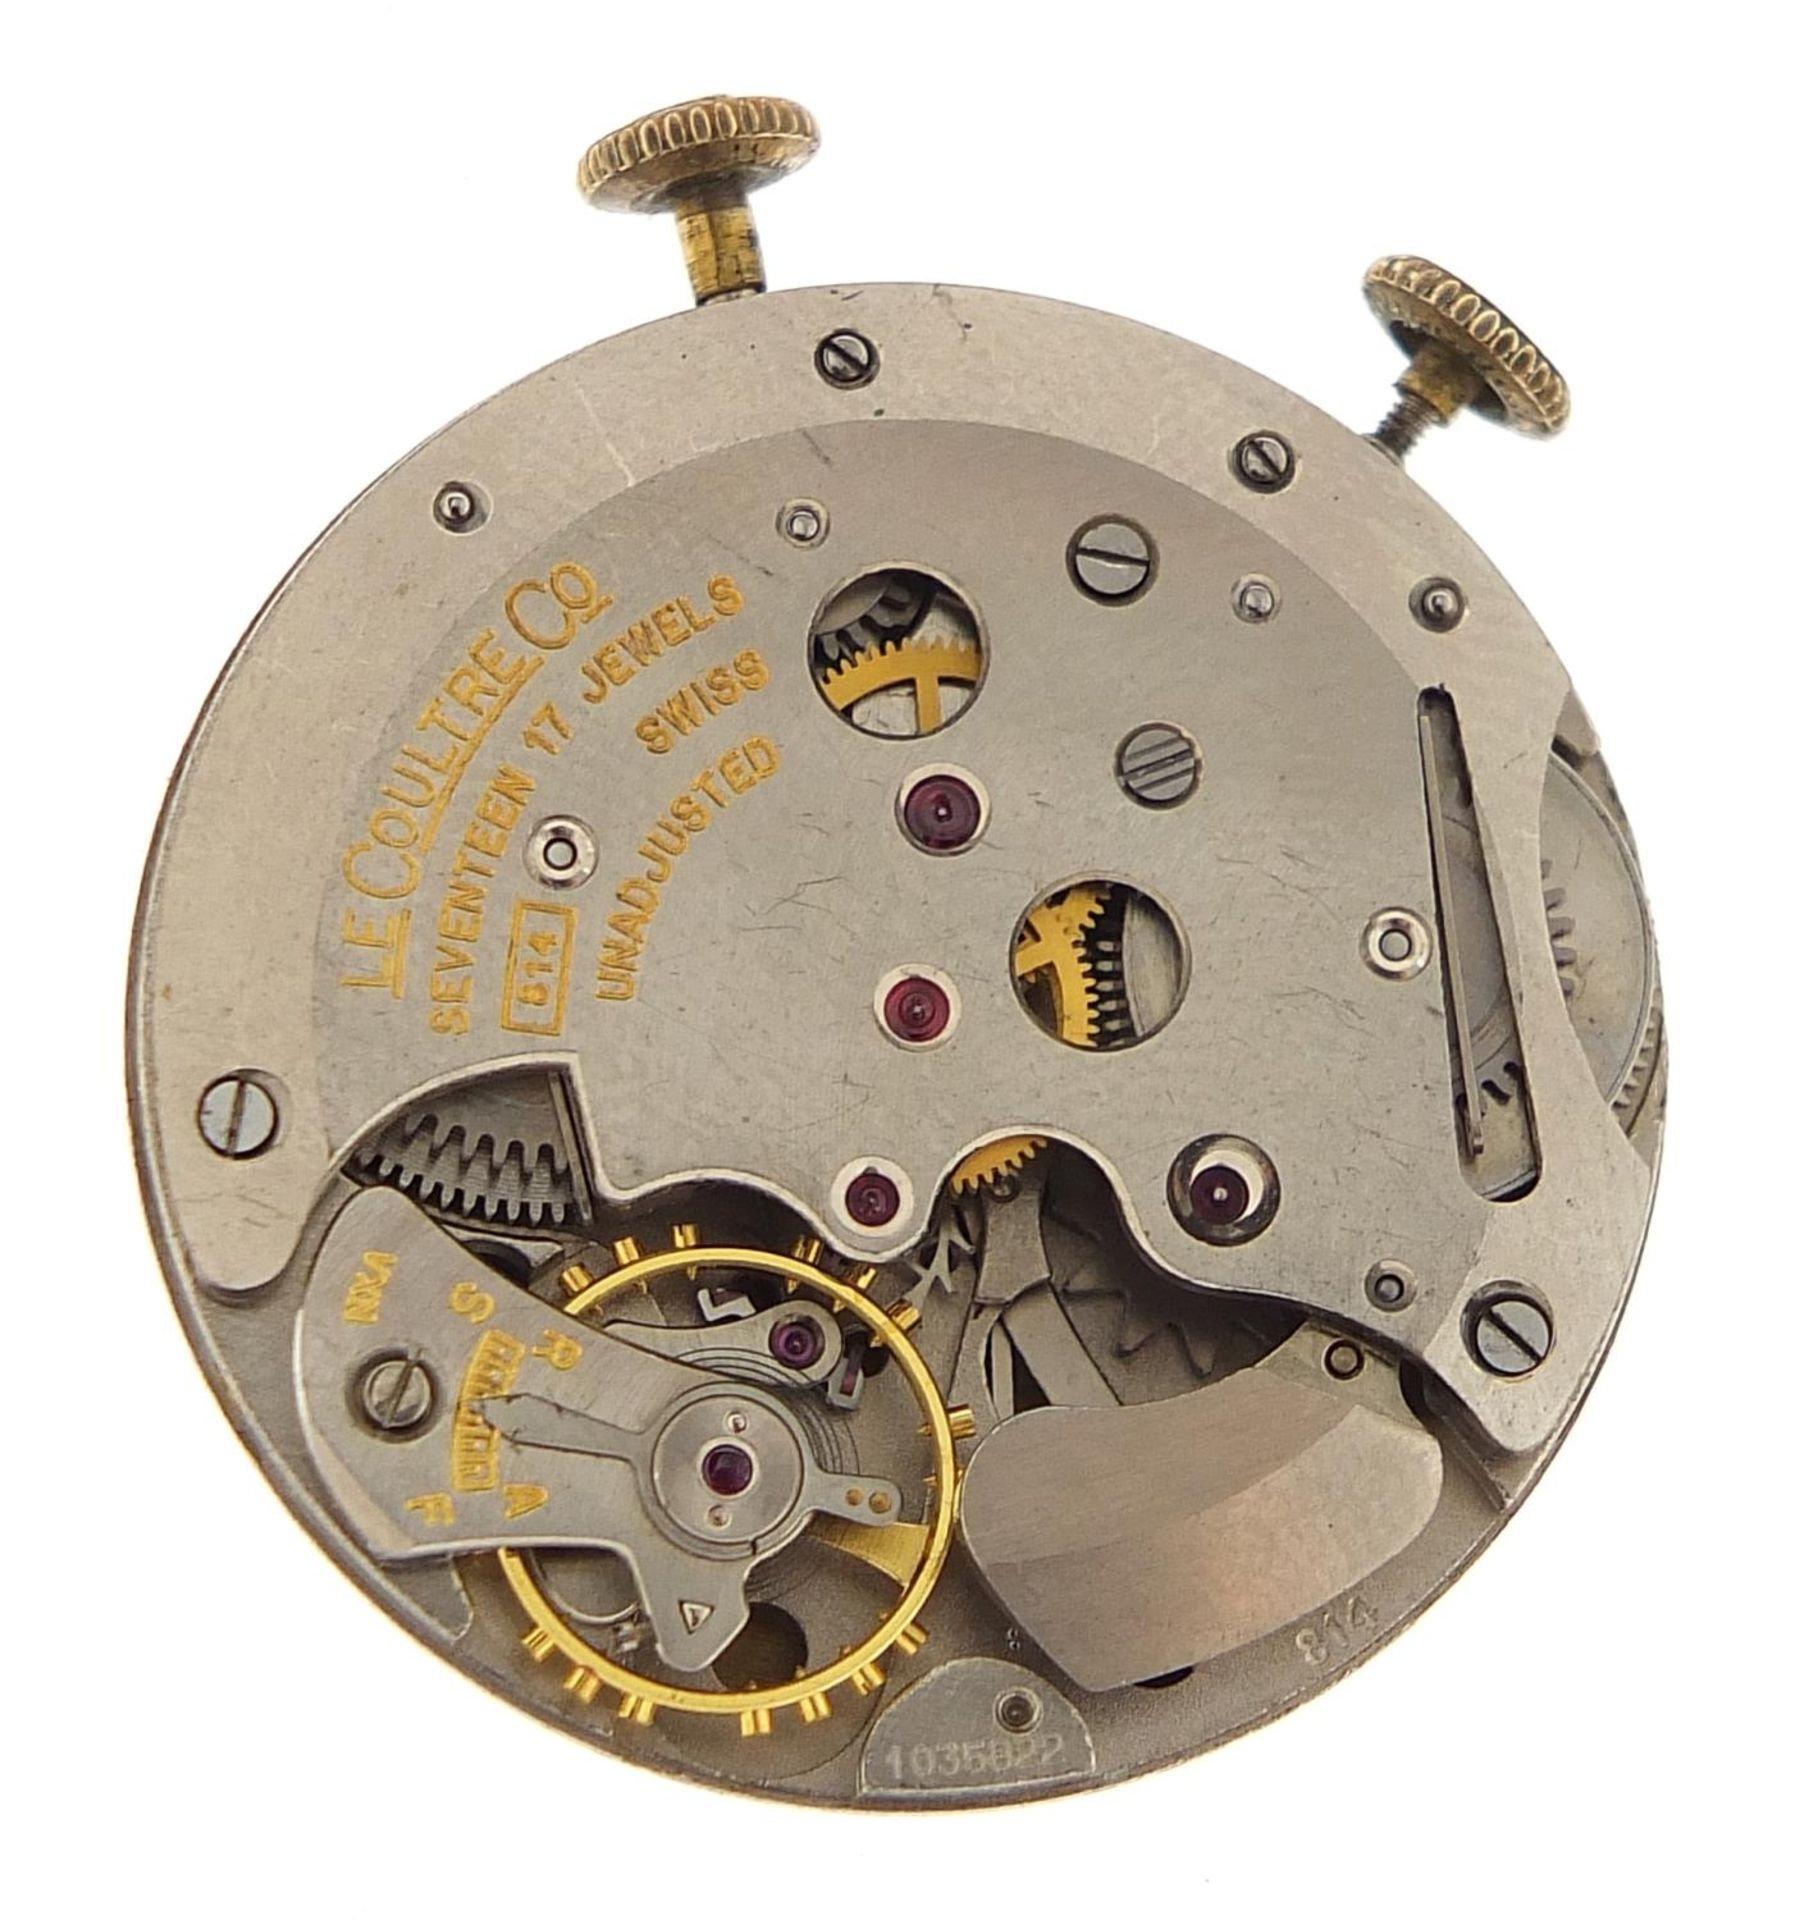 Jaeger LeCoultre, vintage Motoring interest gentlemen's 10K gold filled wristwatch with Henry Ford - Image 5 of 7